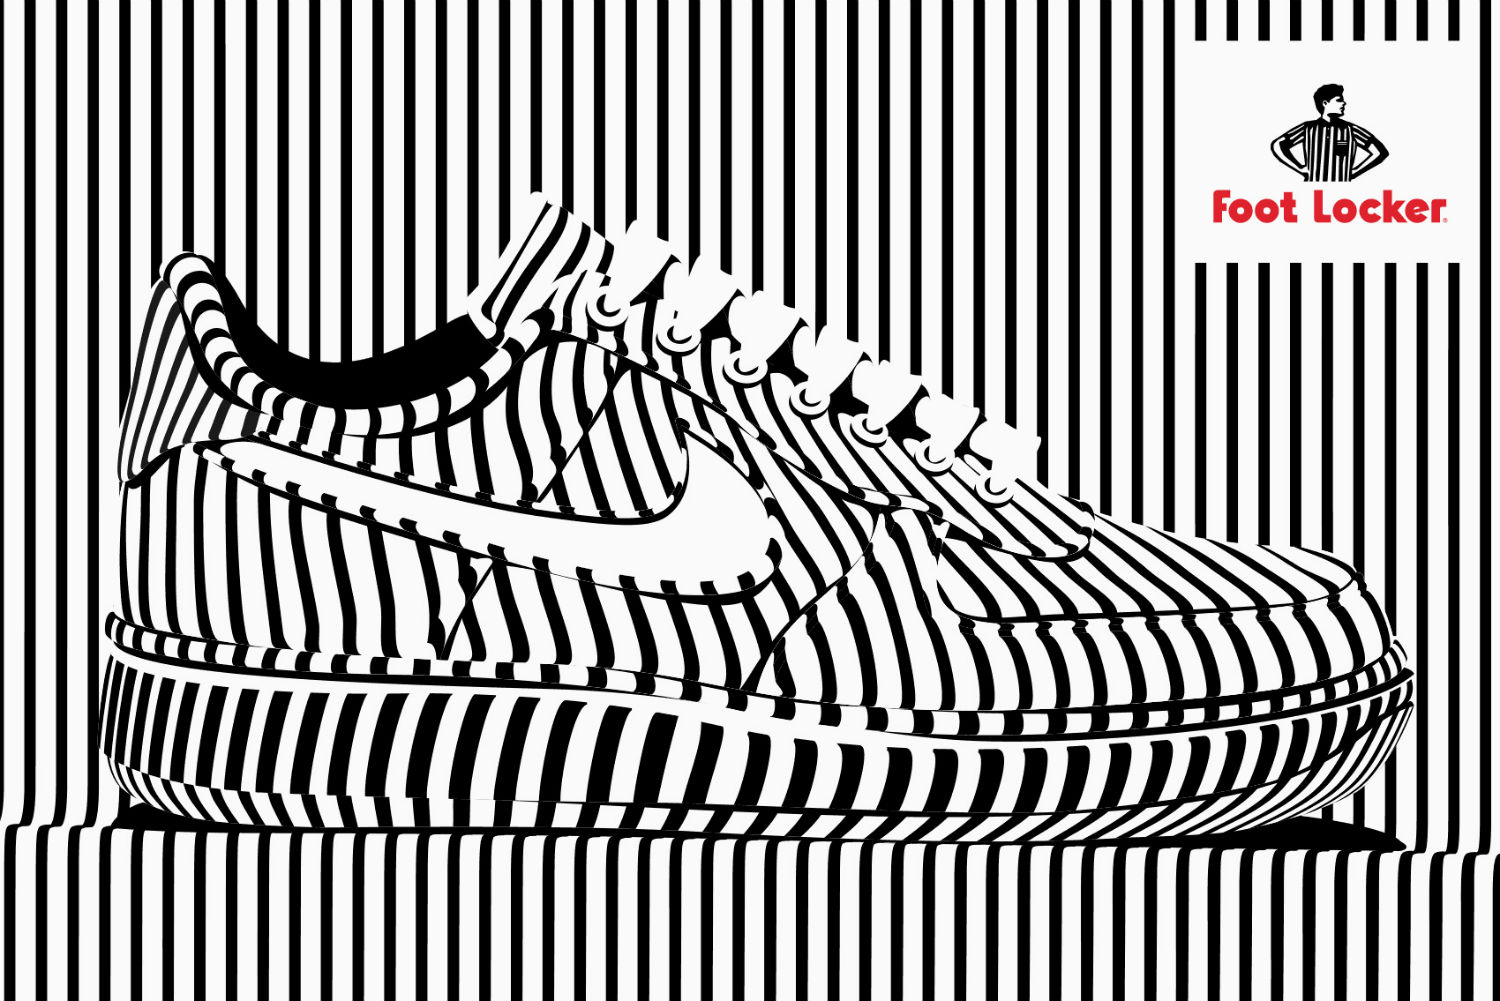 alex trochut black white illusion illustration foot locker 